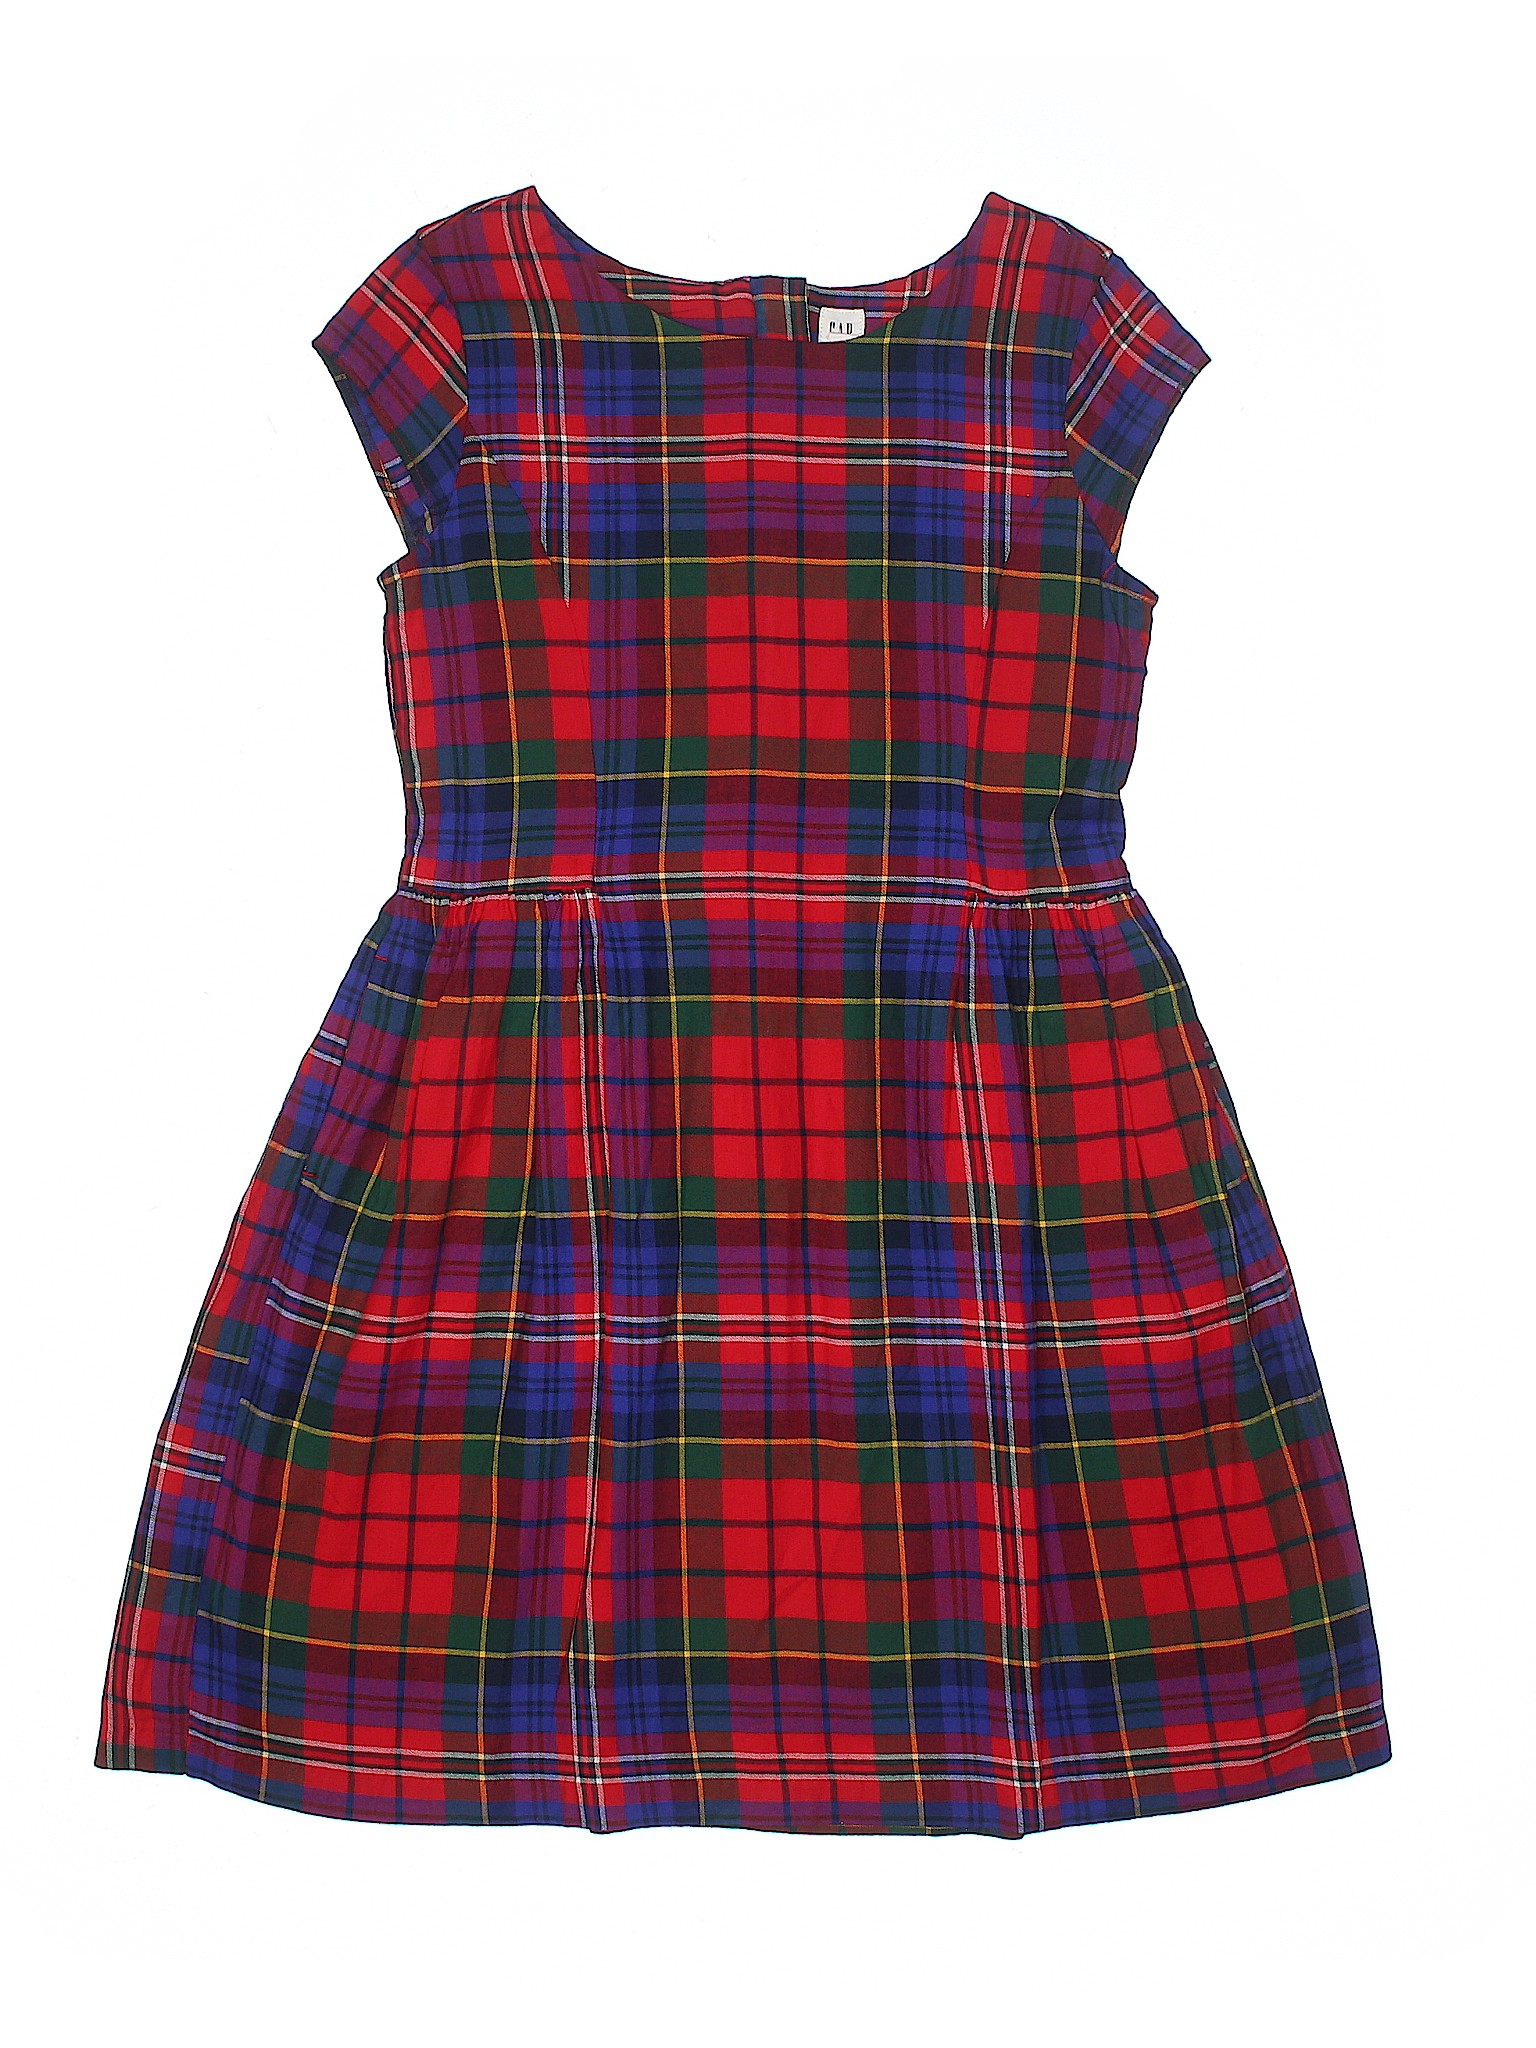 Gap Kids 100% Cotton Plaid Red Dress Size 12 - 67% off | thredUP